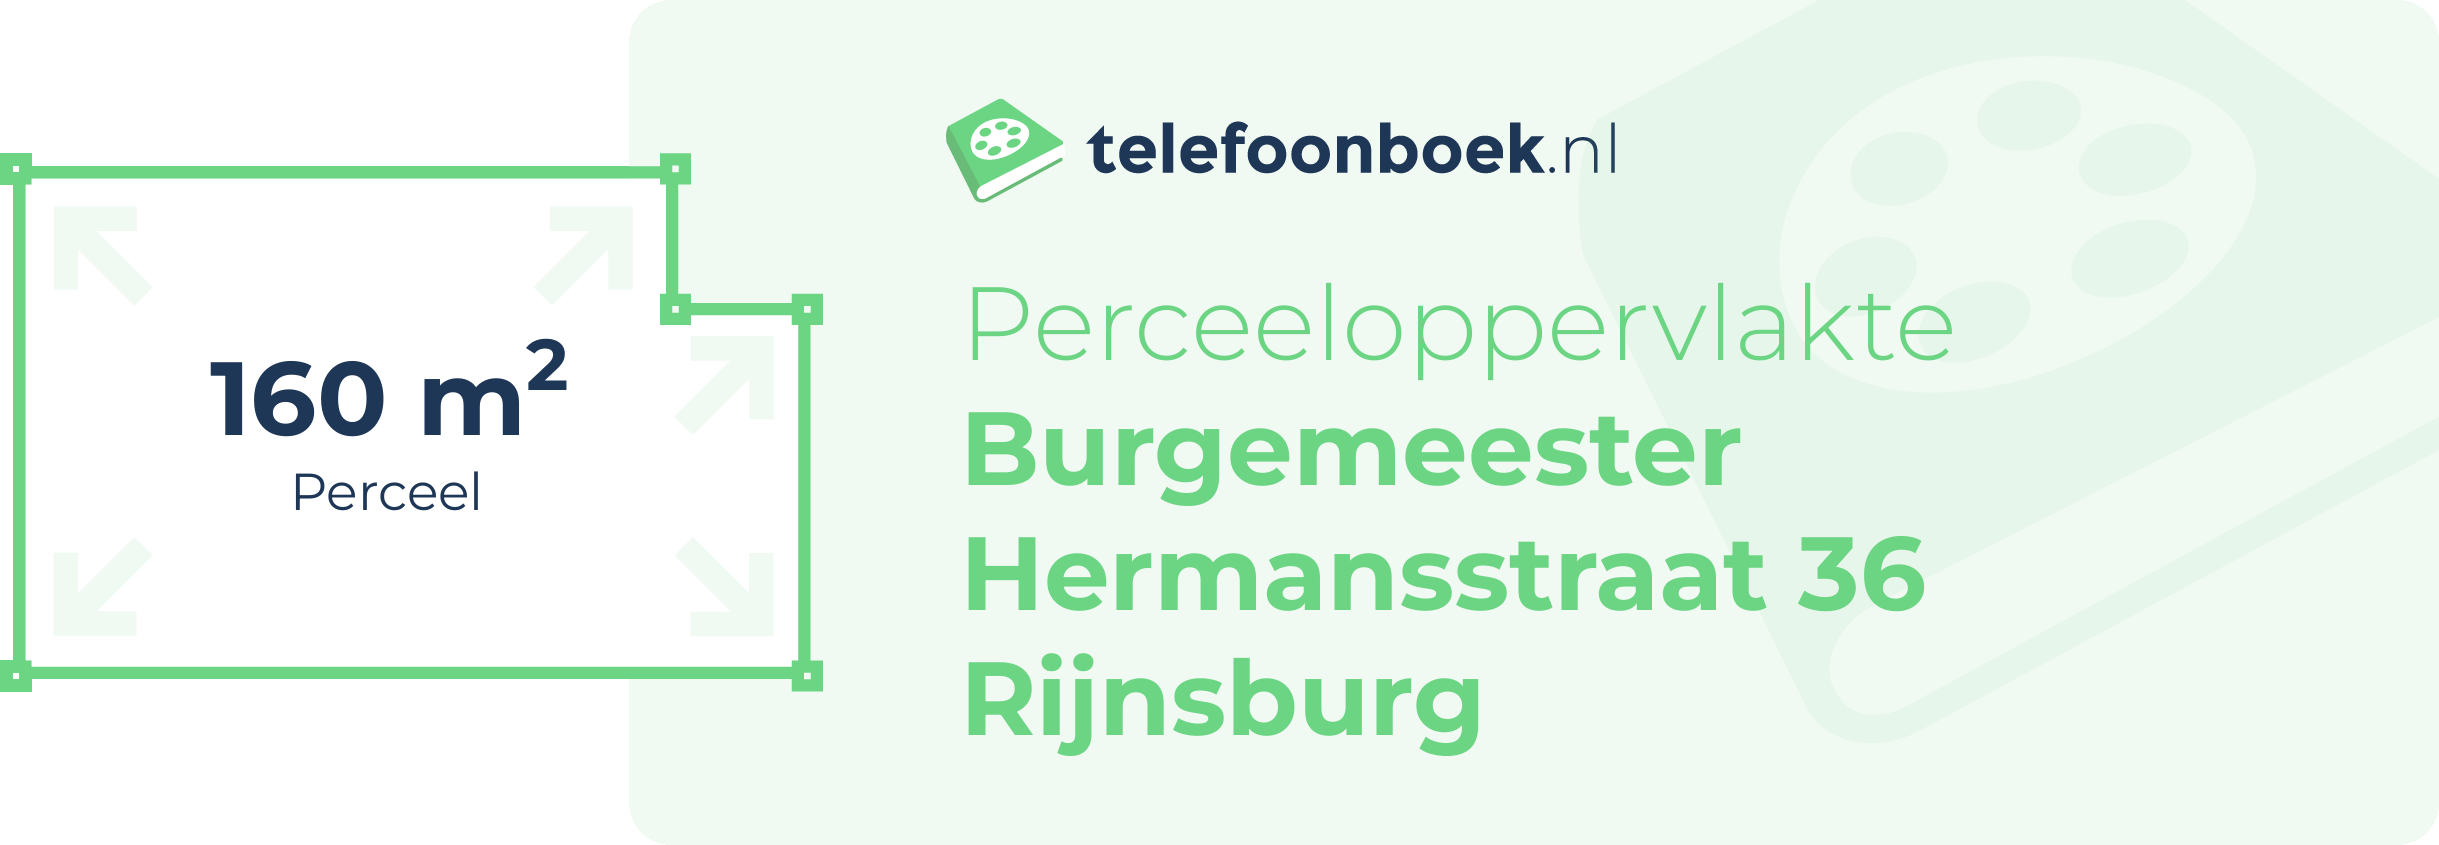 Perceeloppervlakte Burgemeester Hermansstraat 36 Rijnsburg